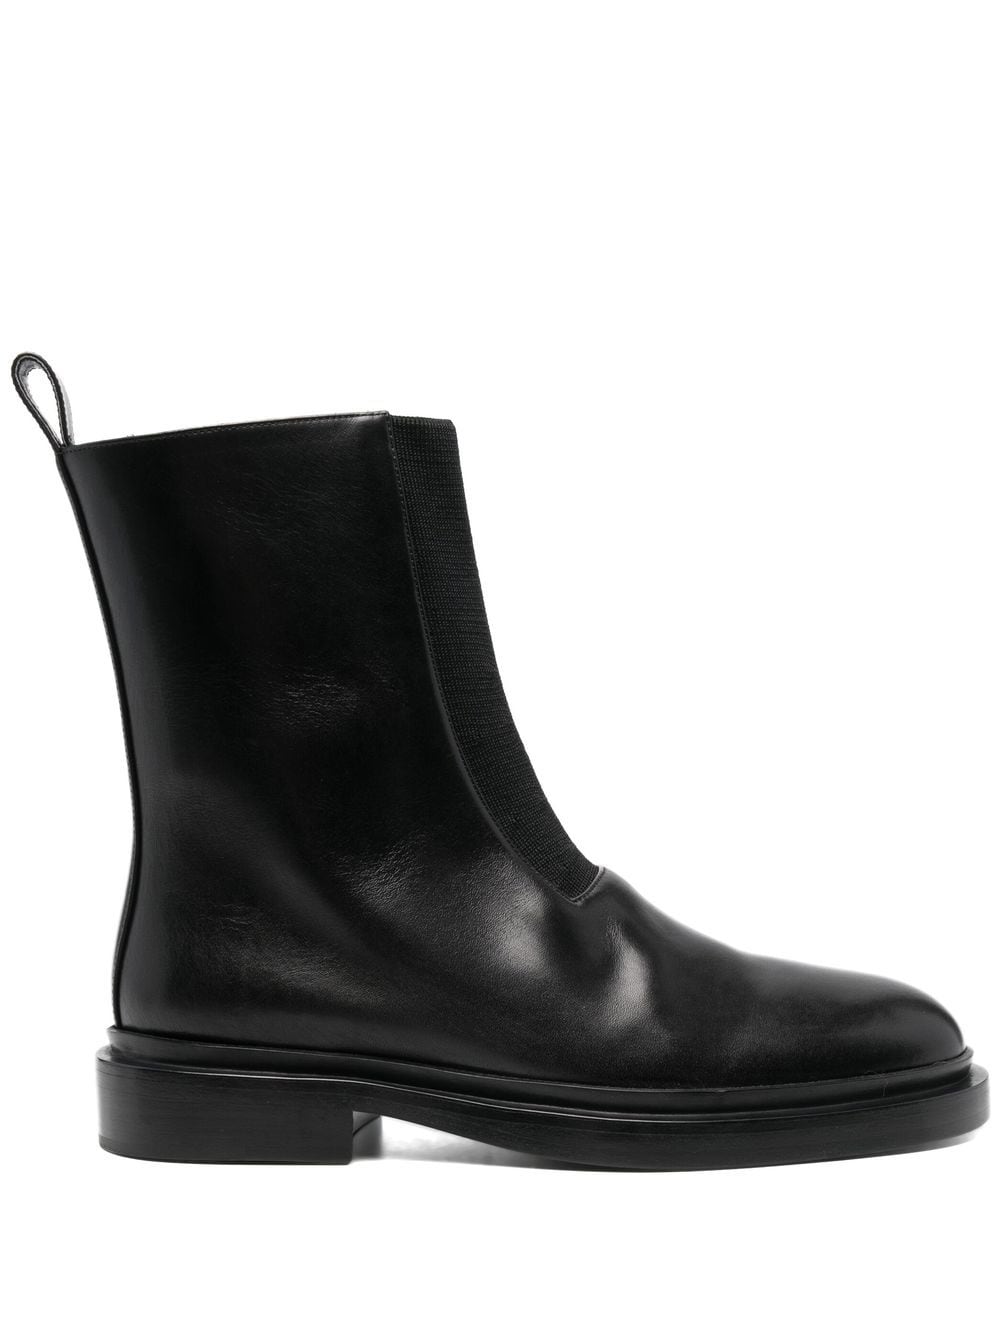 Jil Sander chunky leather boots